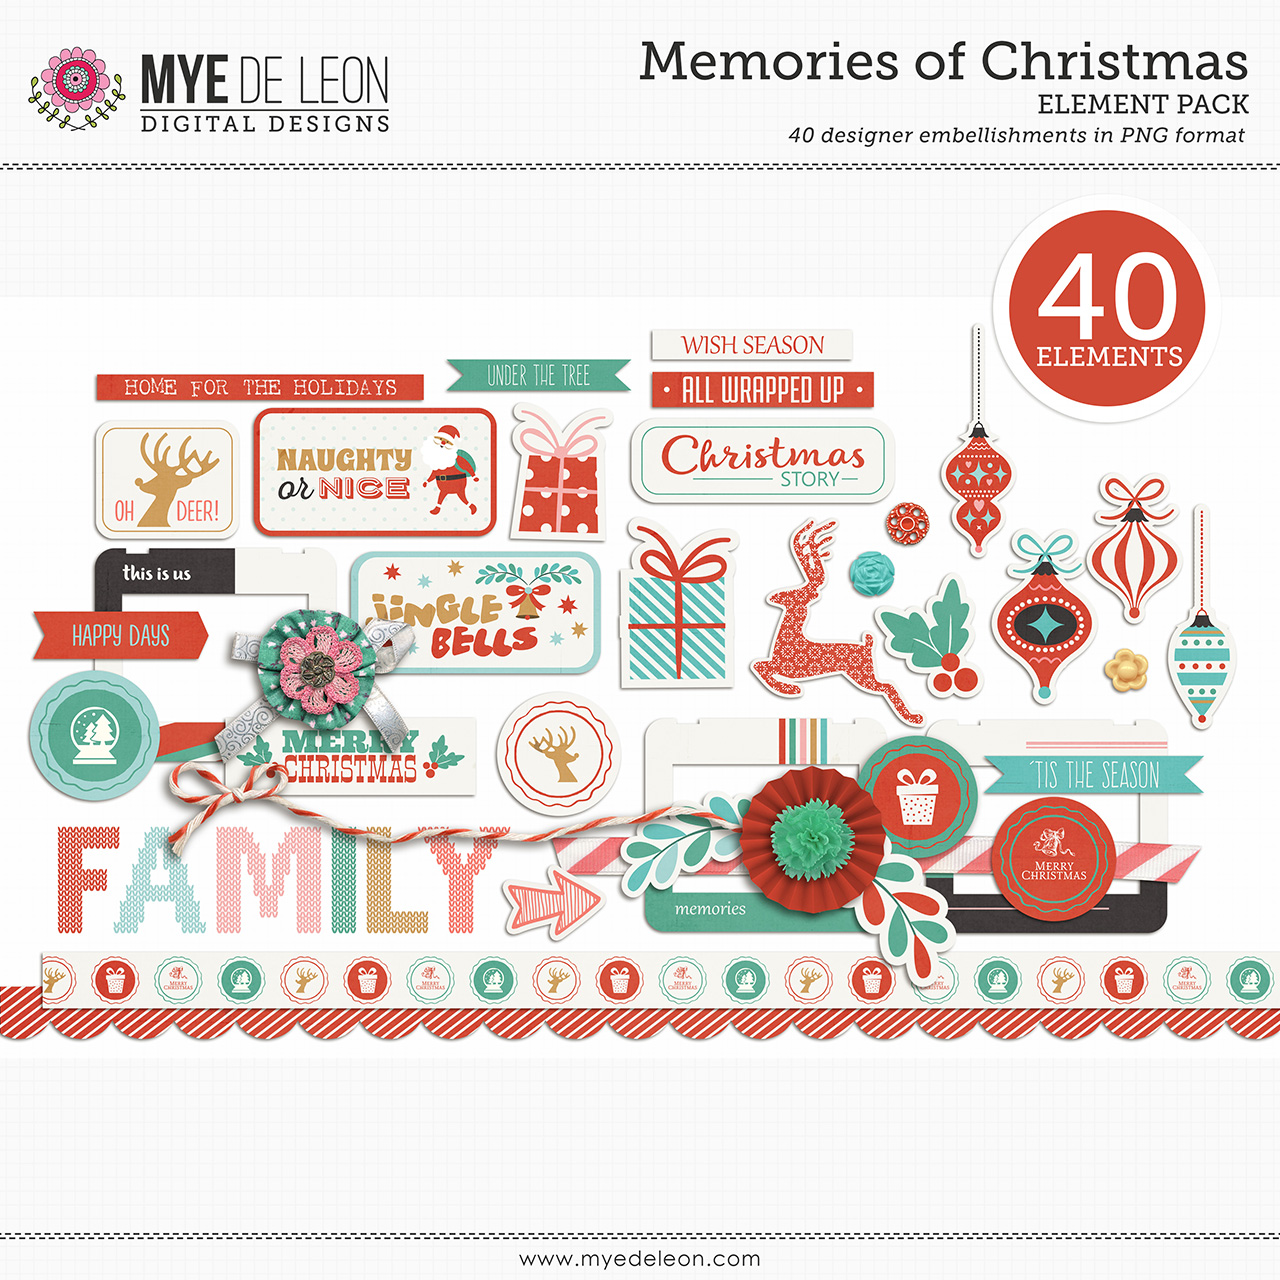 Memories of Christmas | Complete Kit